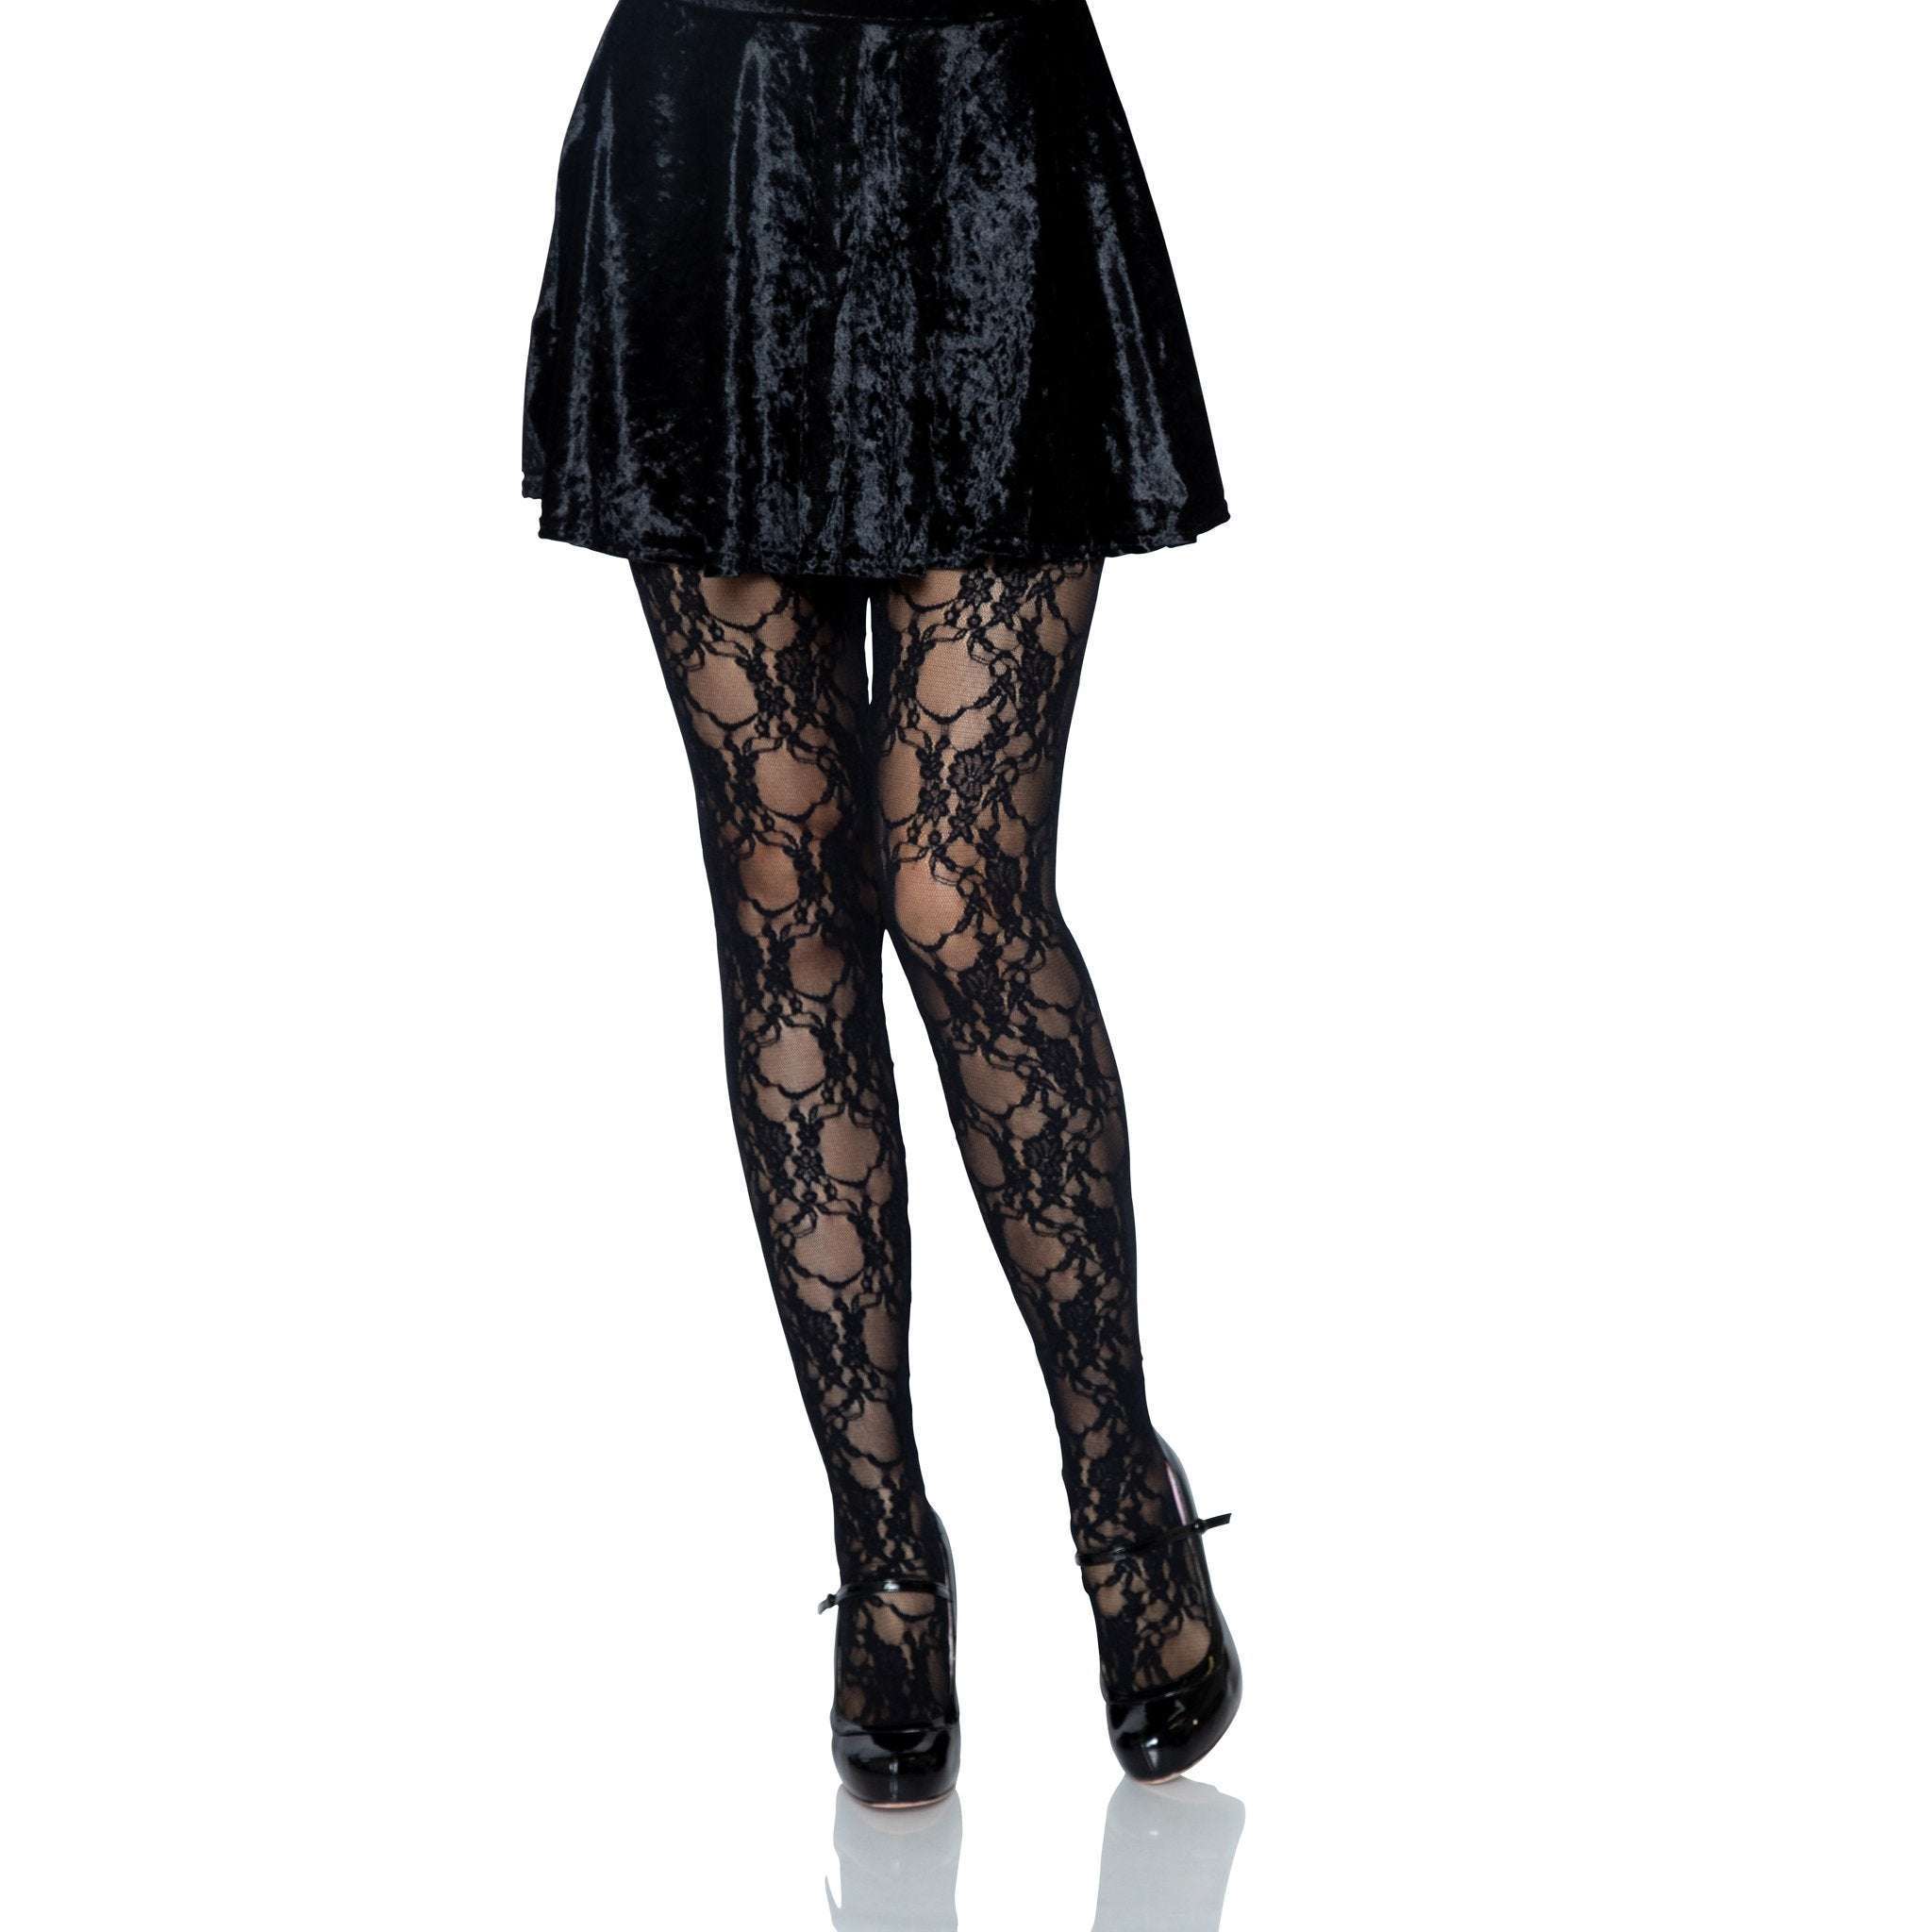 Floral Lace Leggings - Luxury Black